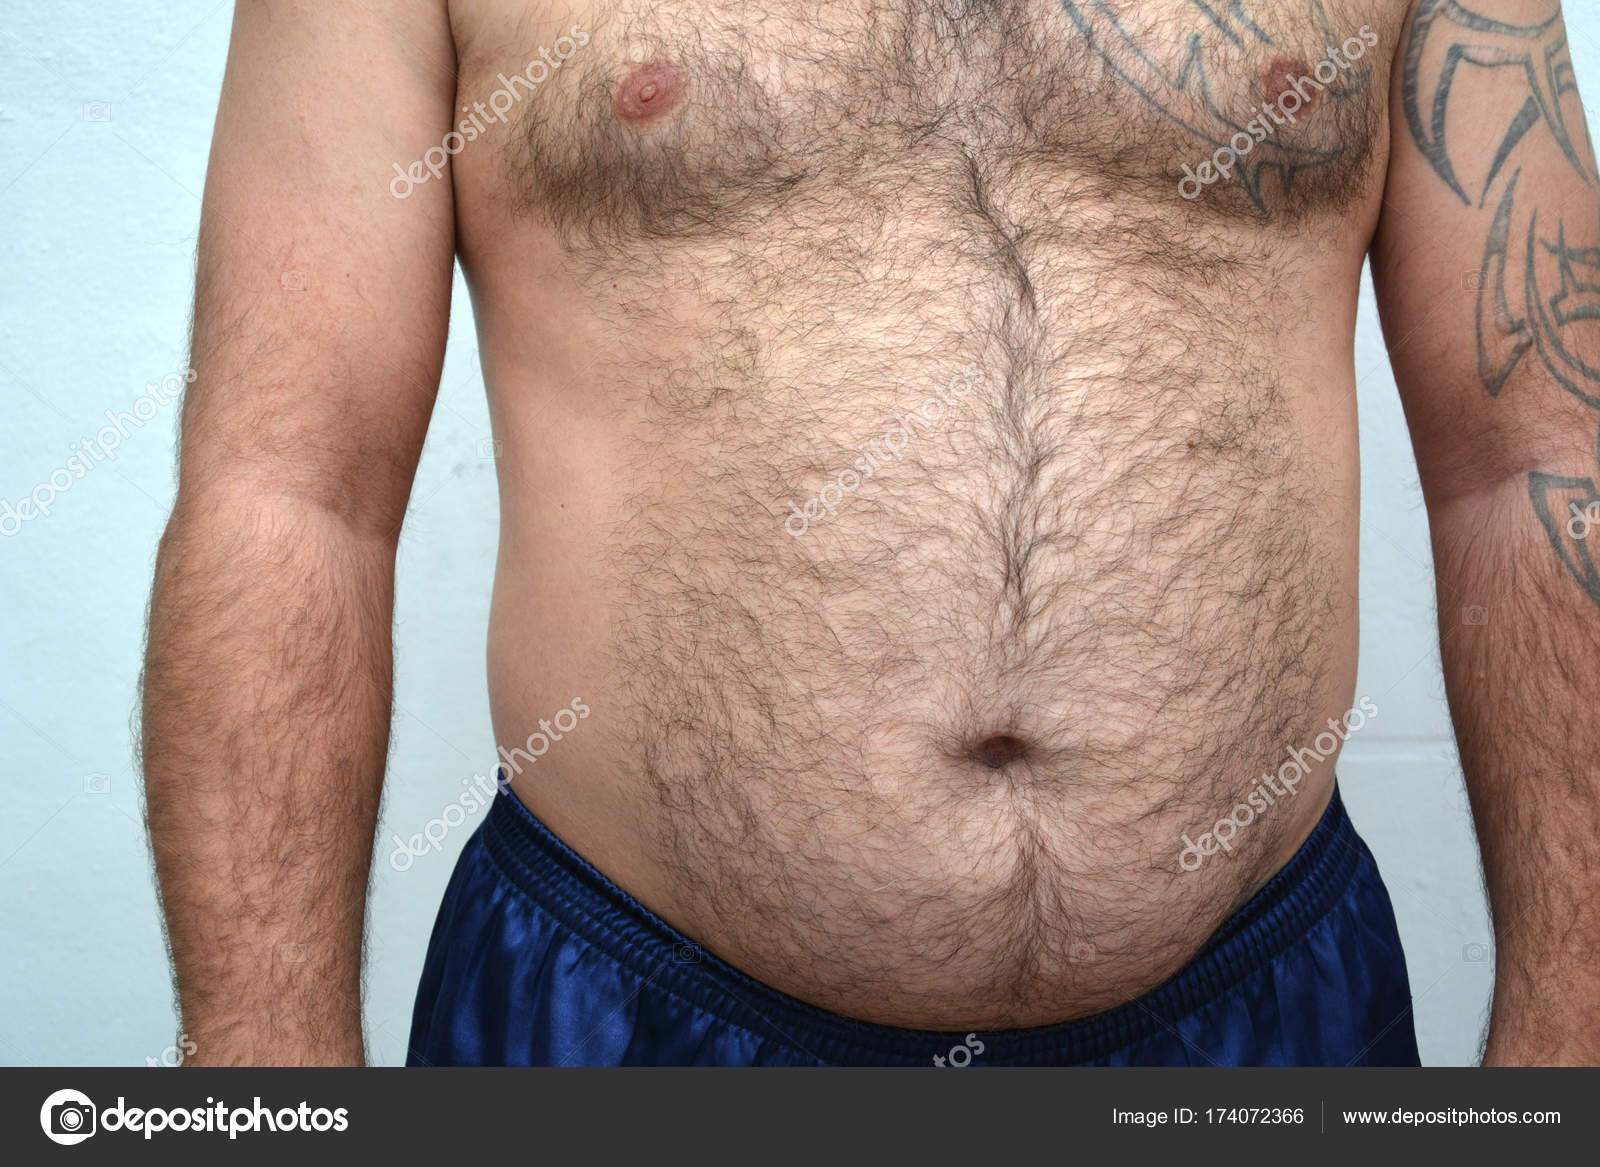 https://st3.depositphotos.com/1167606/17407/i/1600/depositphotos_174072366-stock-photo-fat-man-big-belly-diet.jpg